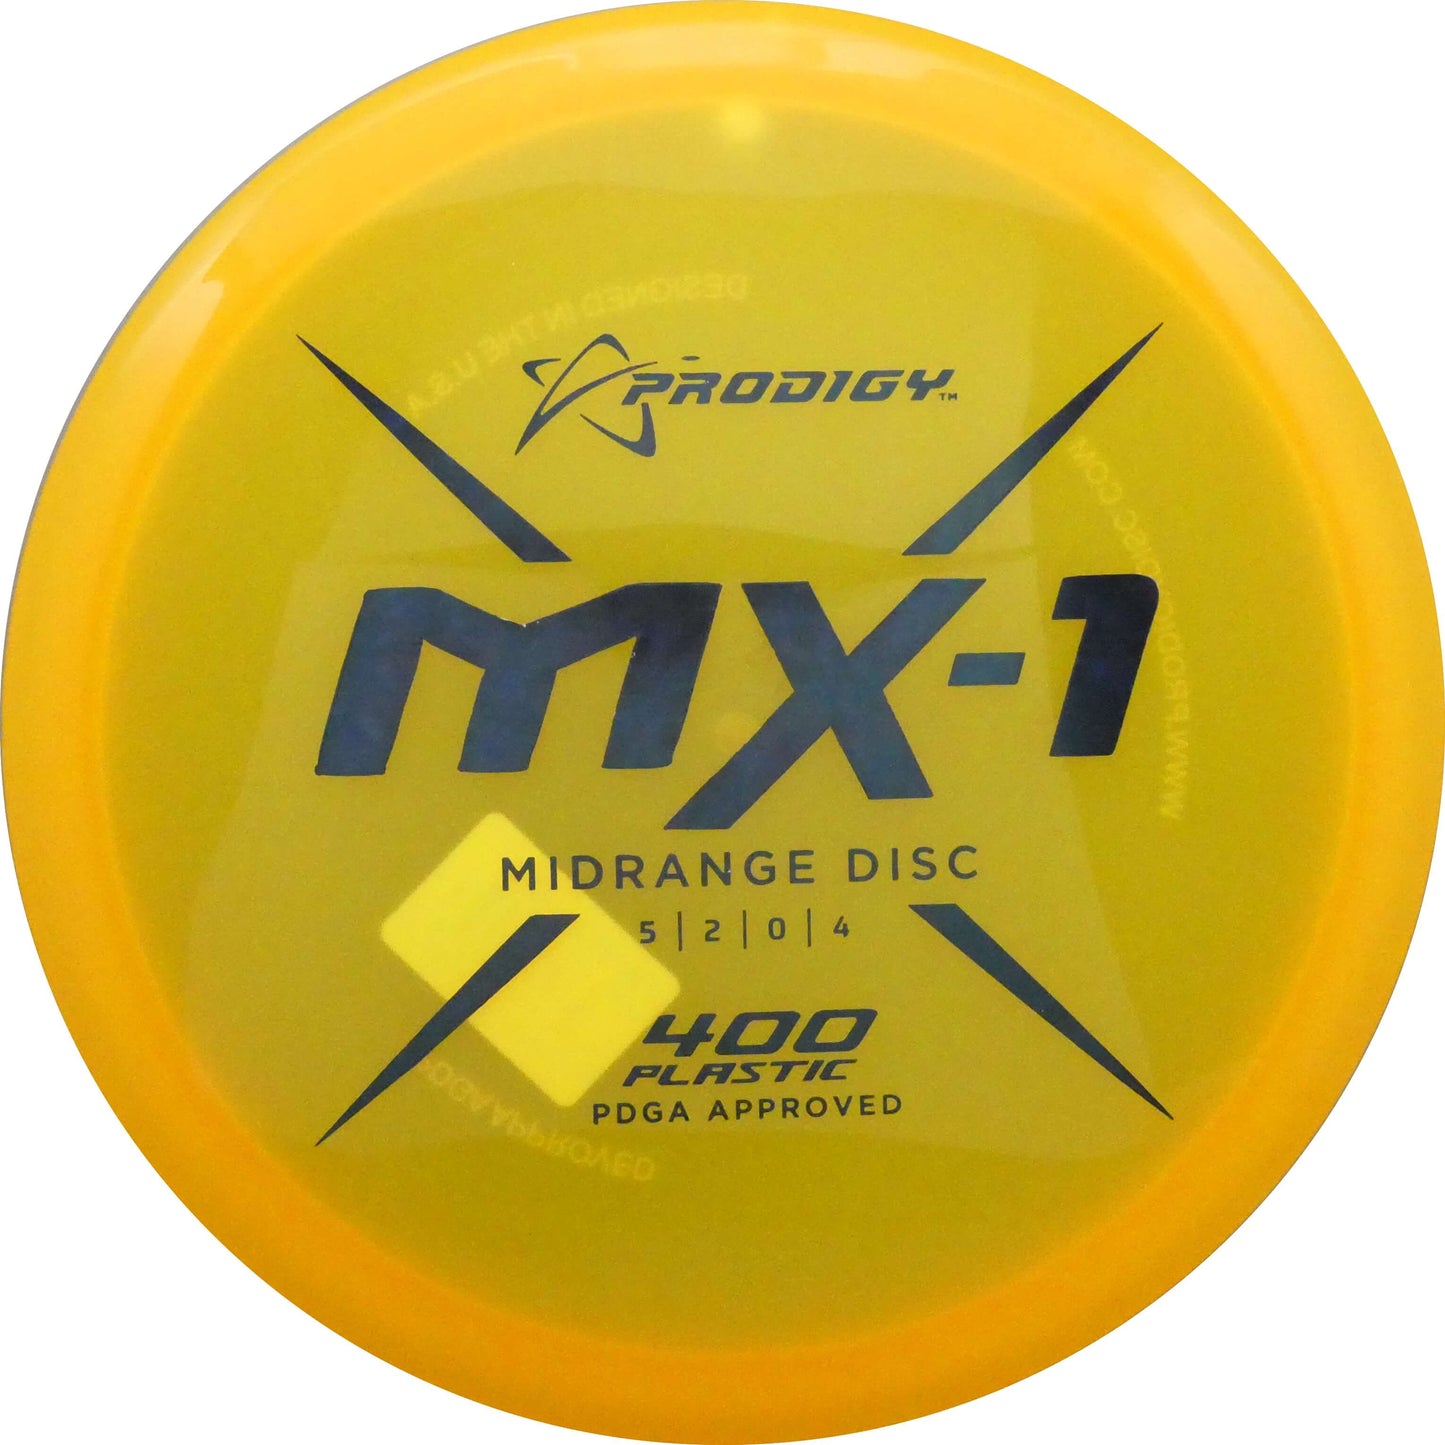 MX-1 Midrange Disc 400 Plastic - 170-176g